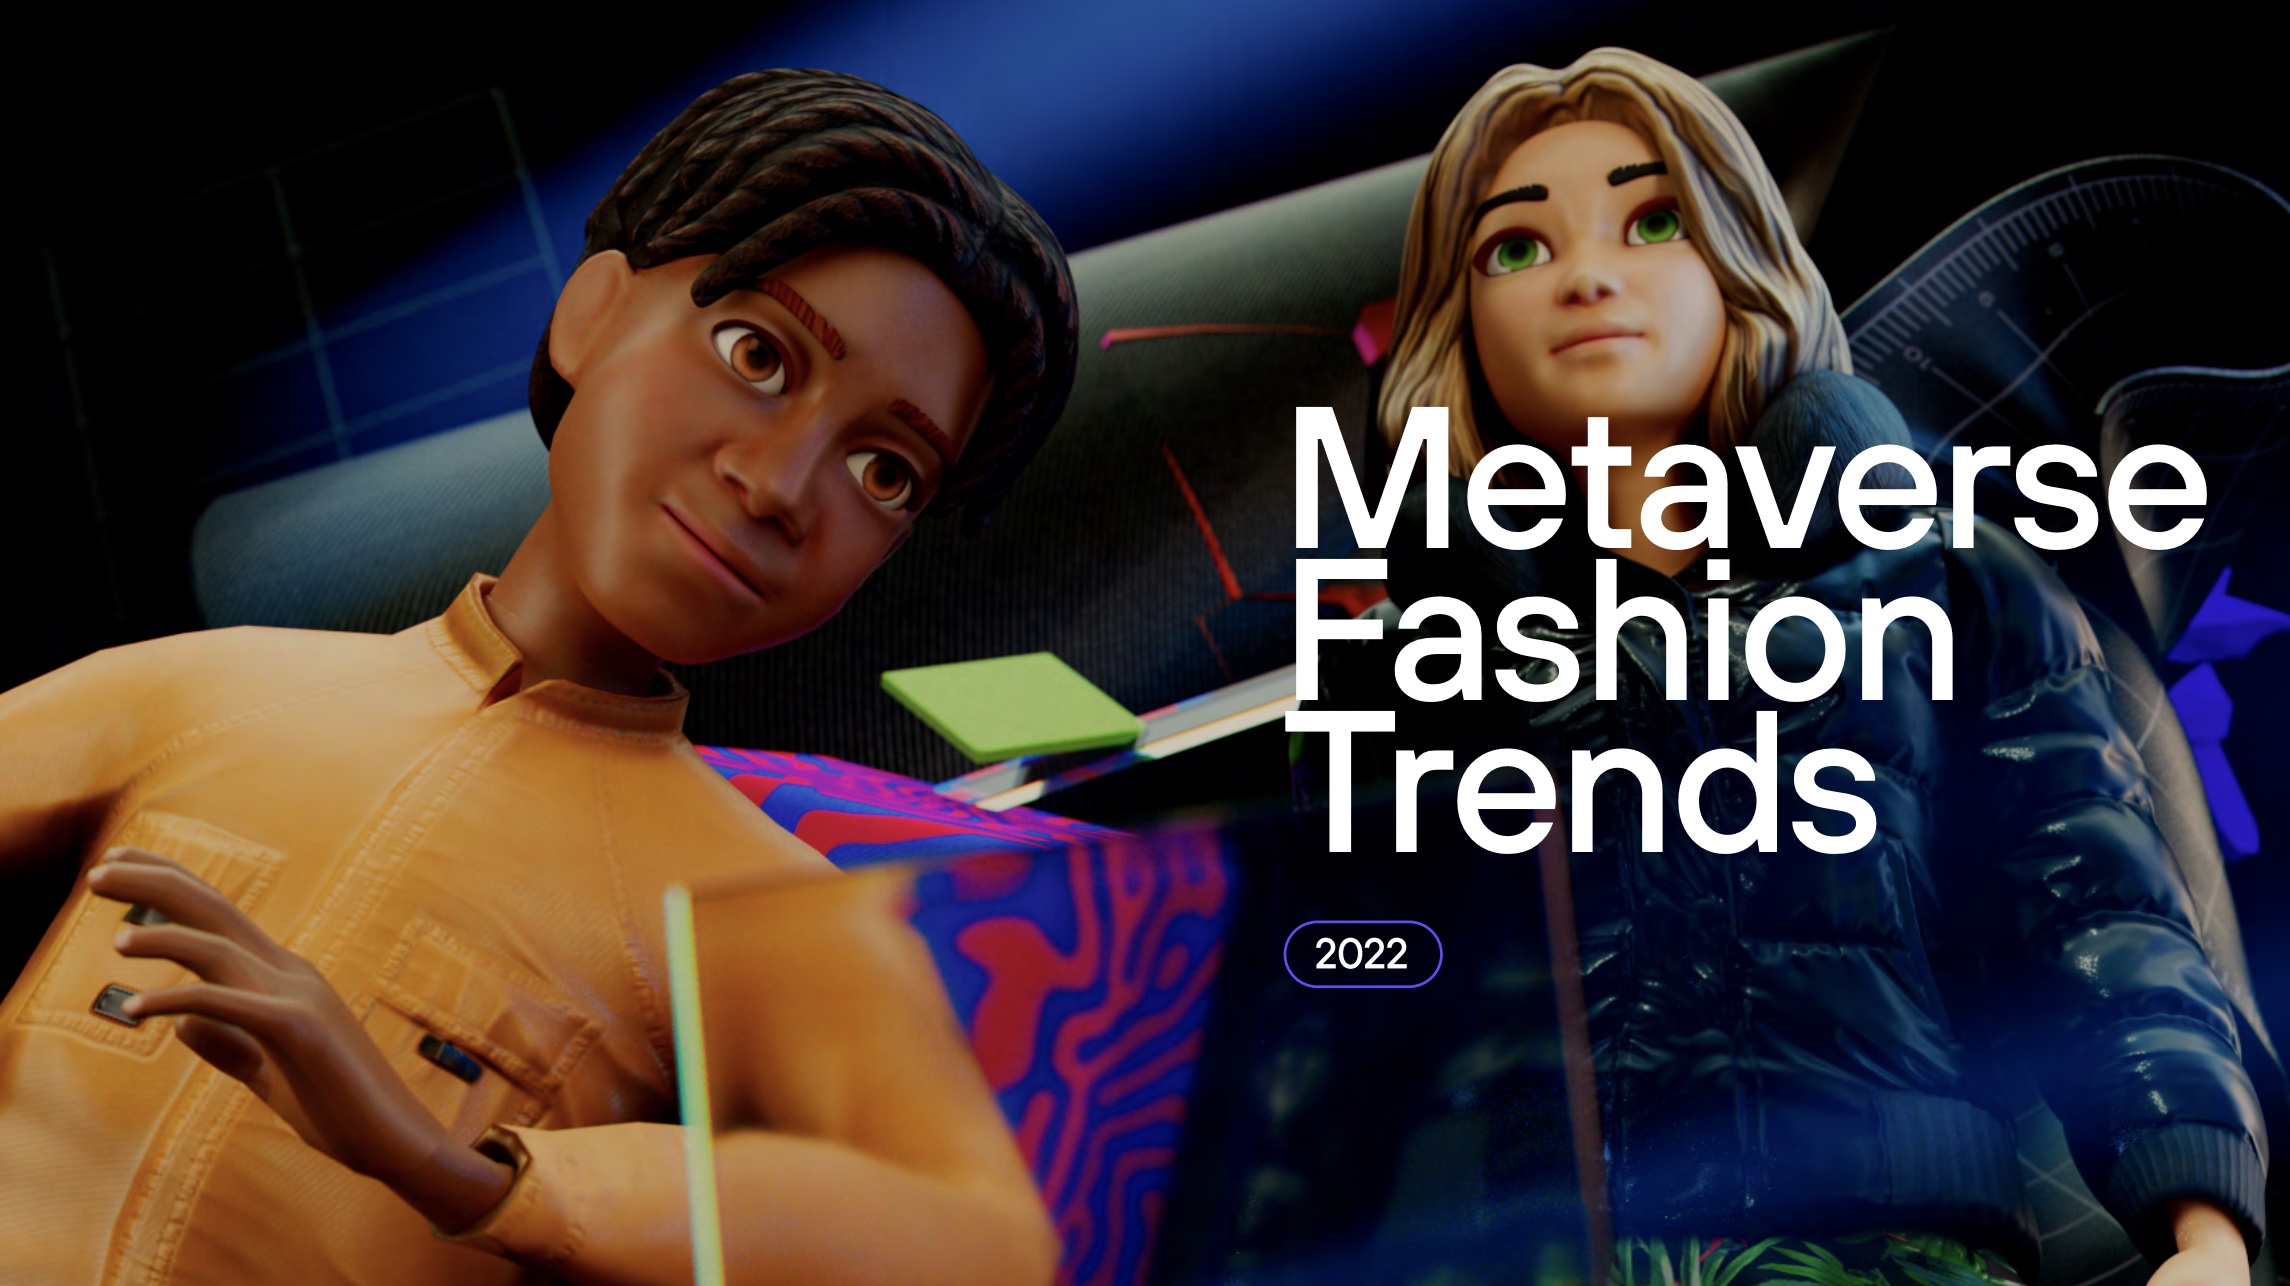 Avatar trends!